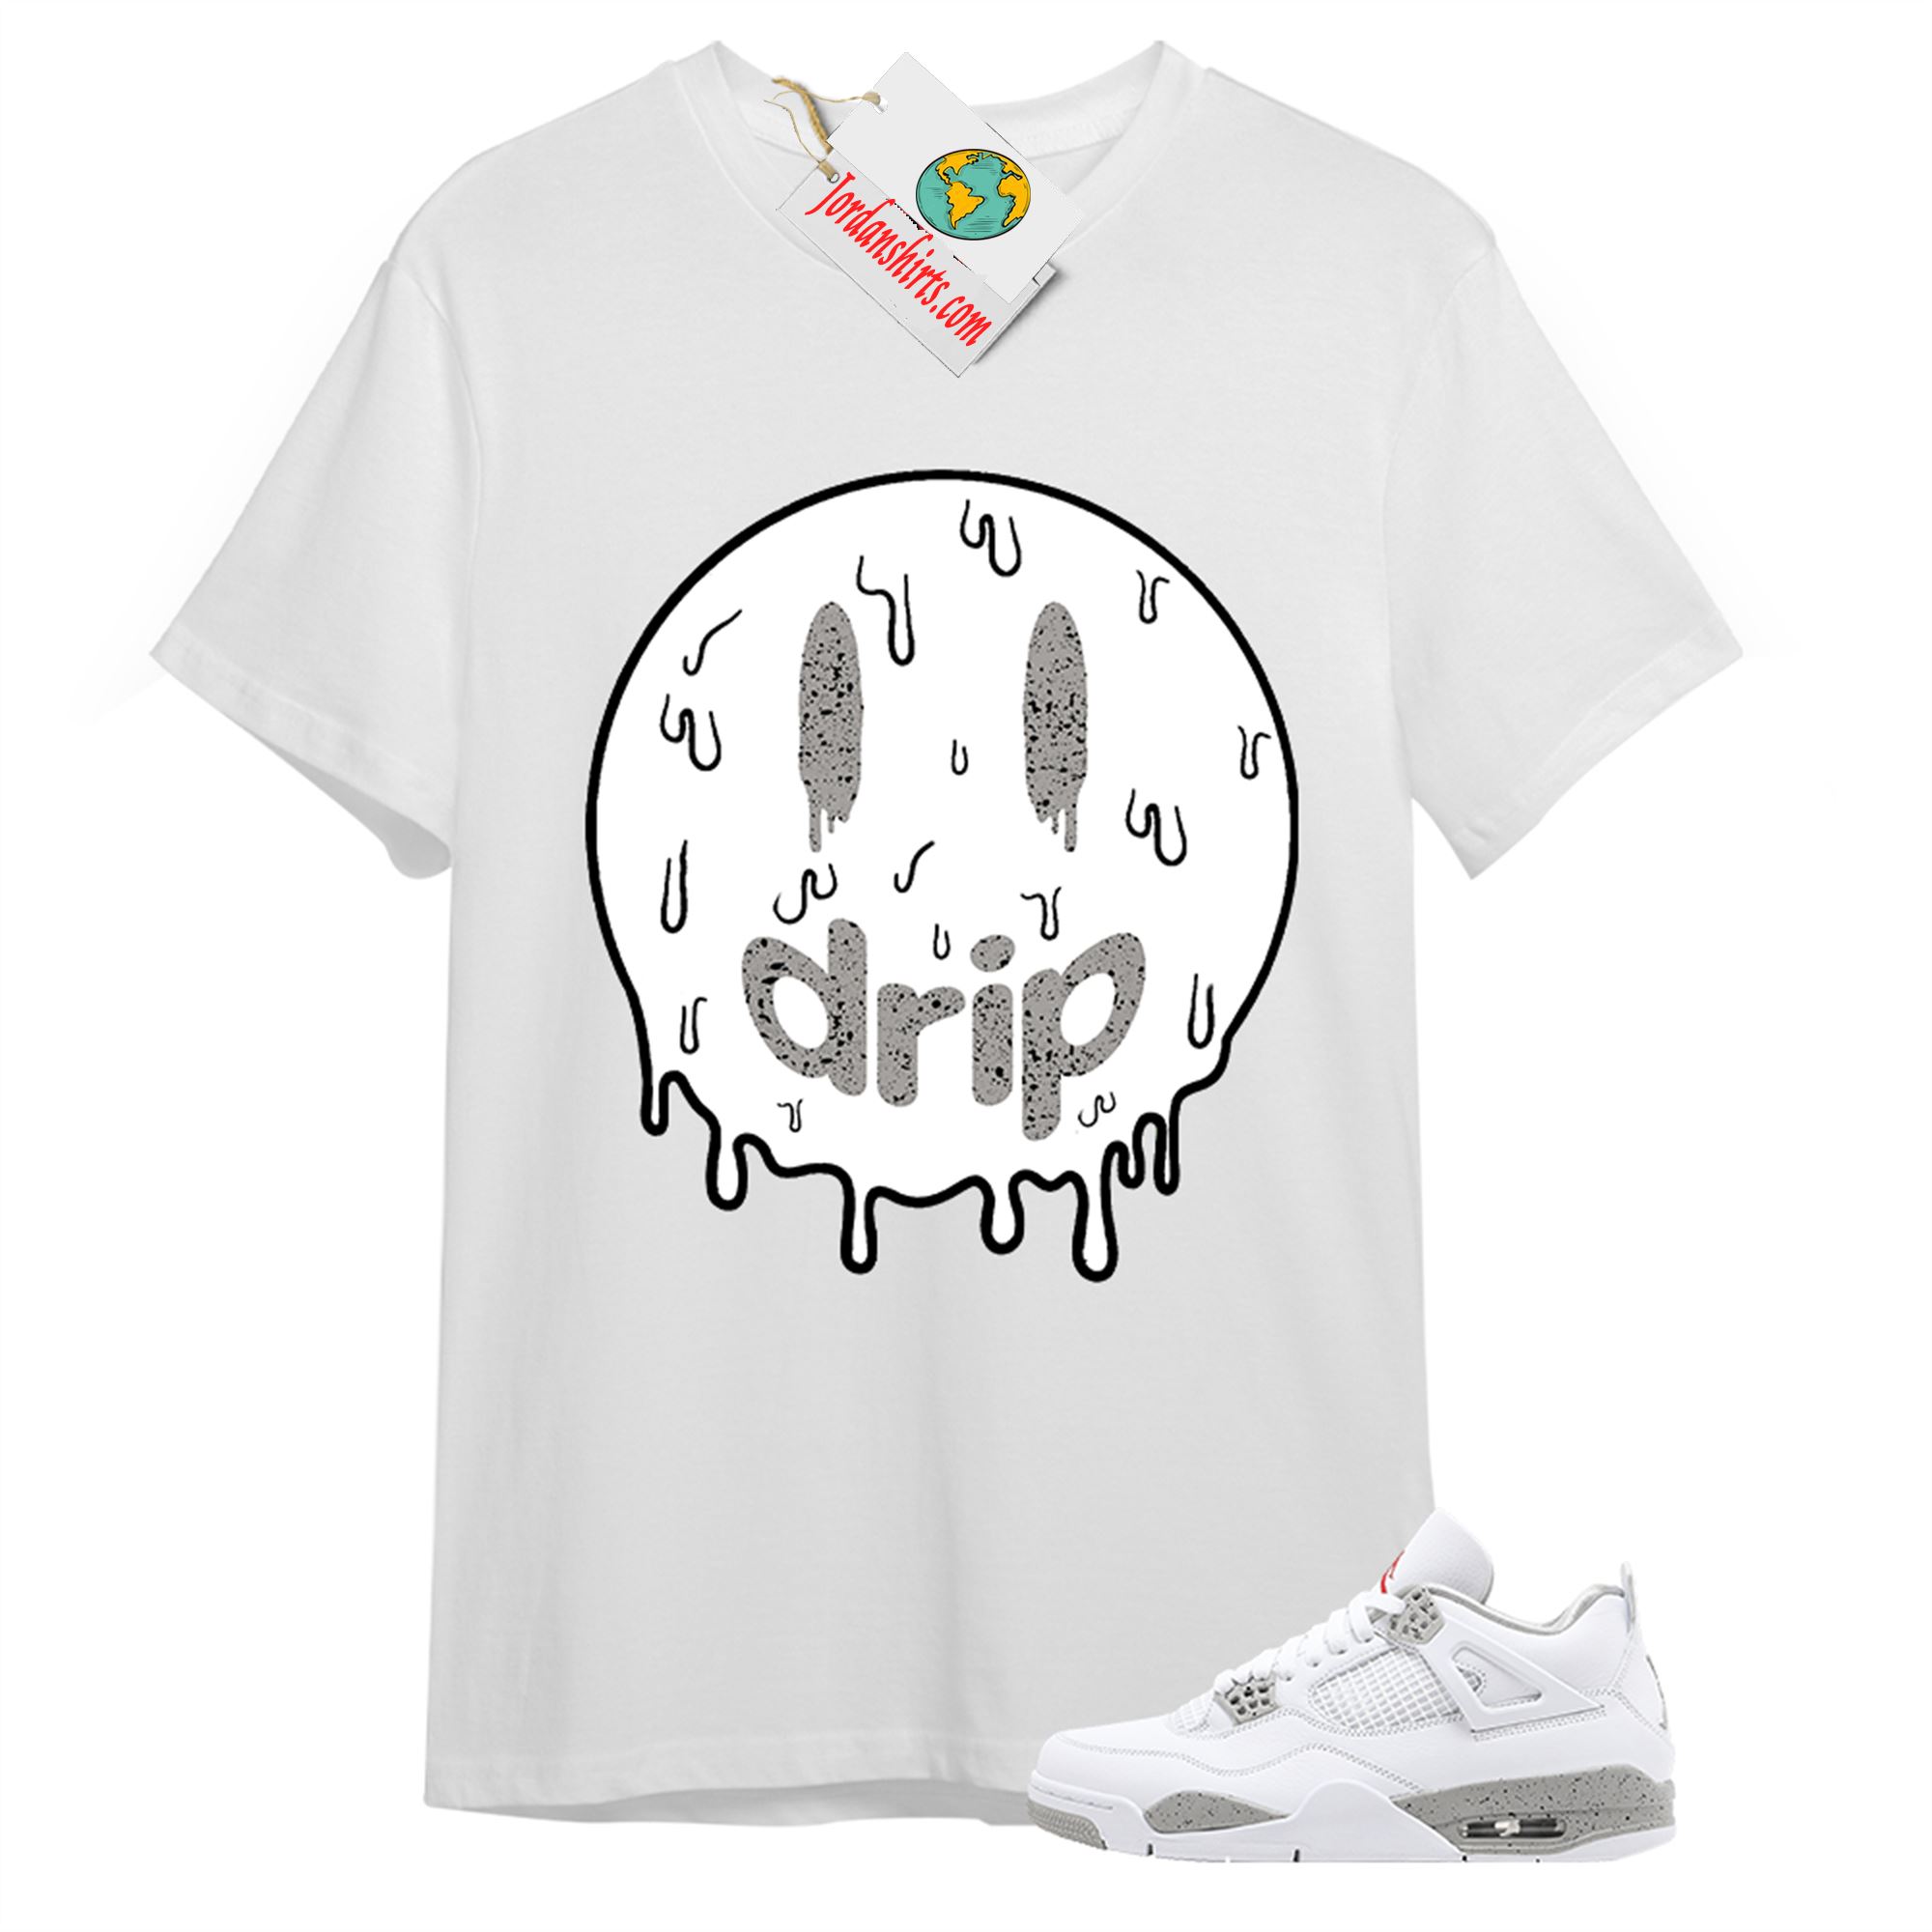 Jordan 4 Shirt, Drip White T-shirt Air Jordan 4 White Oreo 4s Full Size Up To 5xl